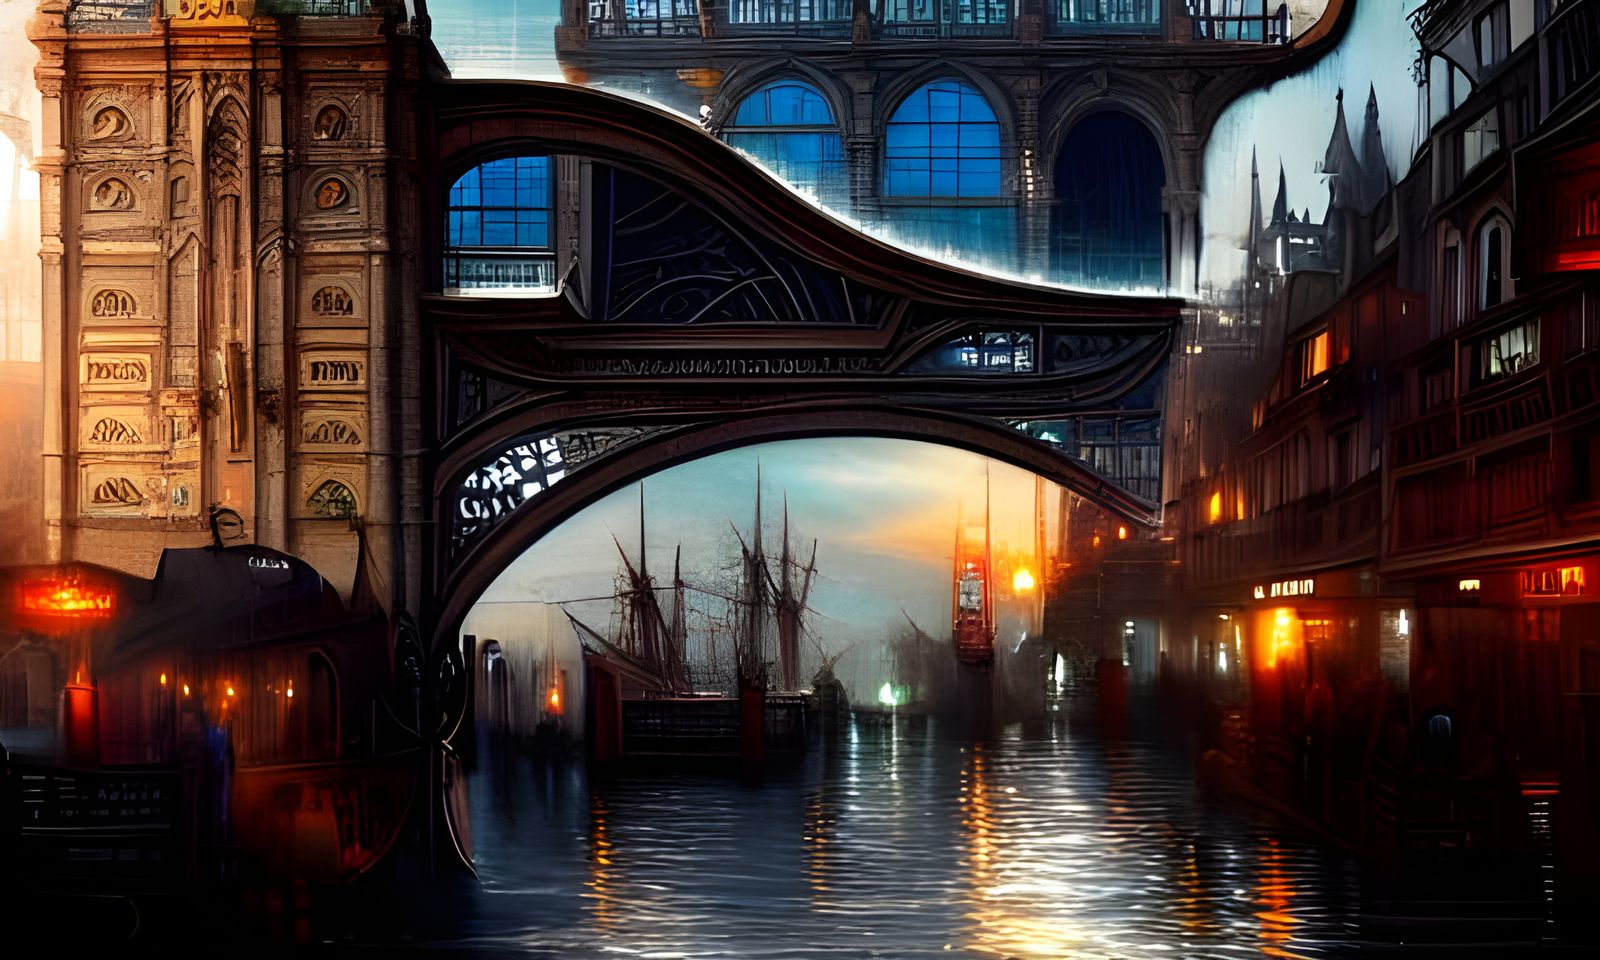 "The docks Bridge"